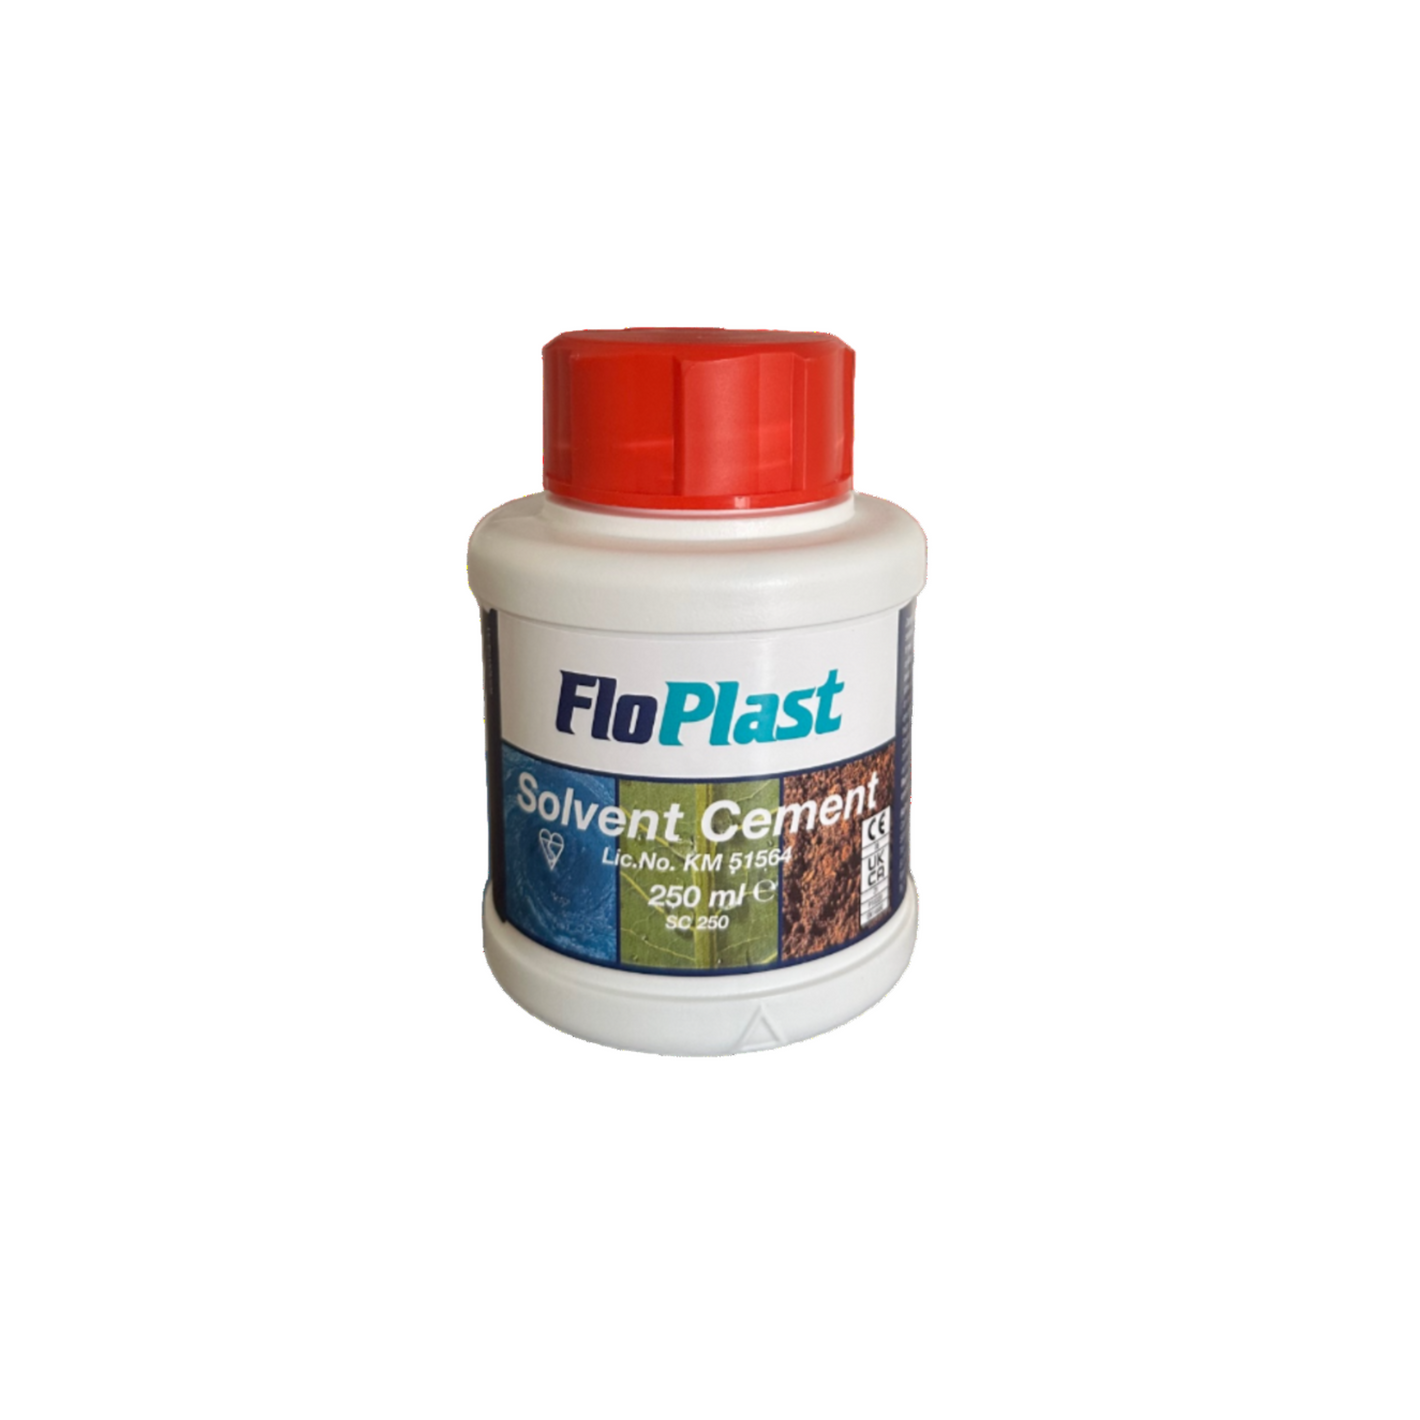 FloPlast Solvent Cement - 250ml